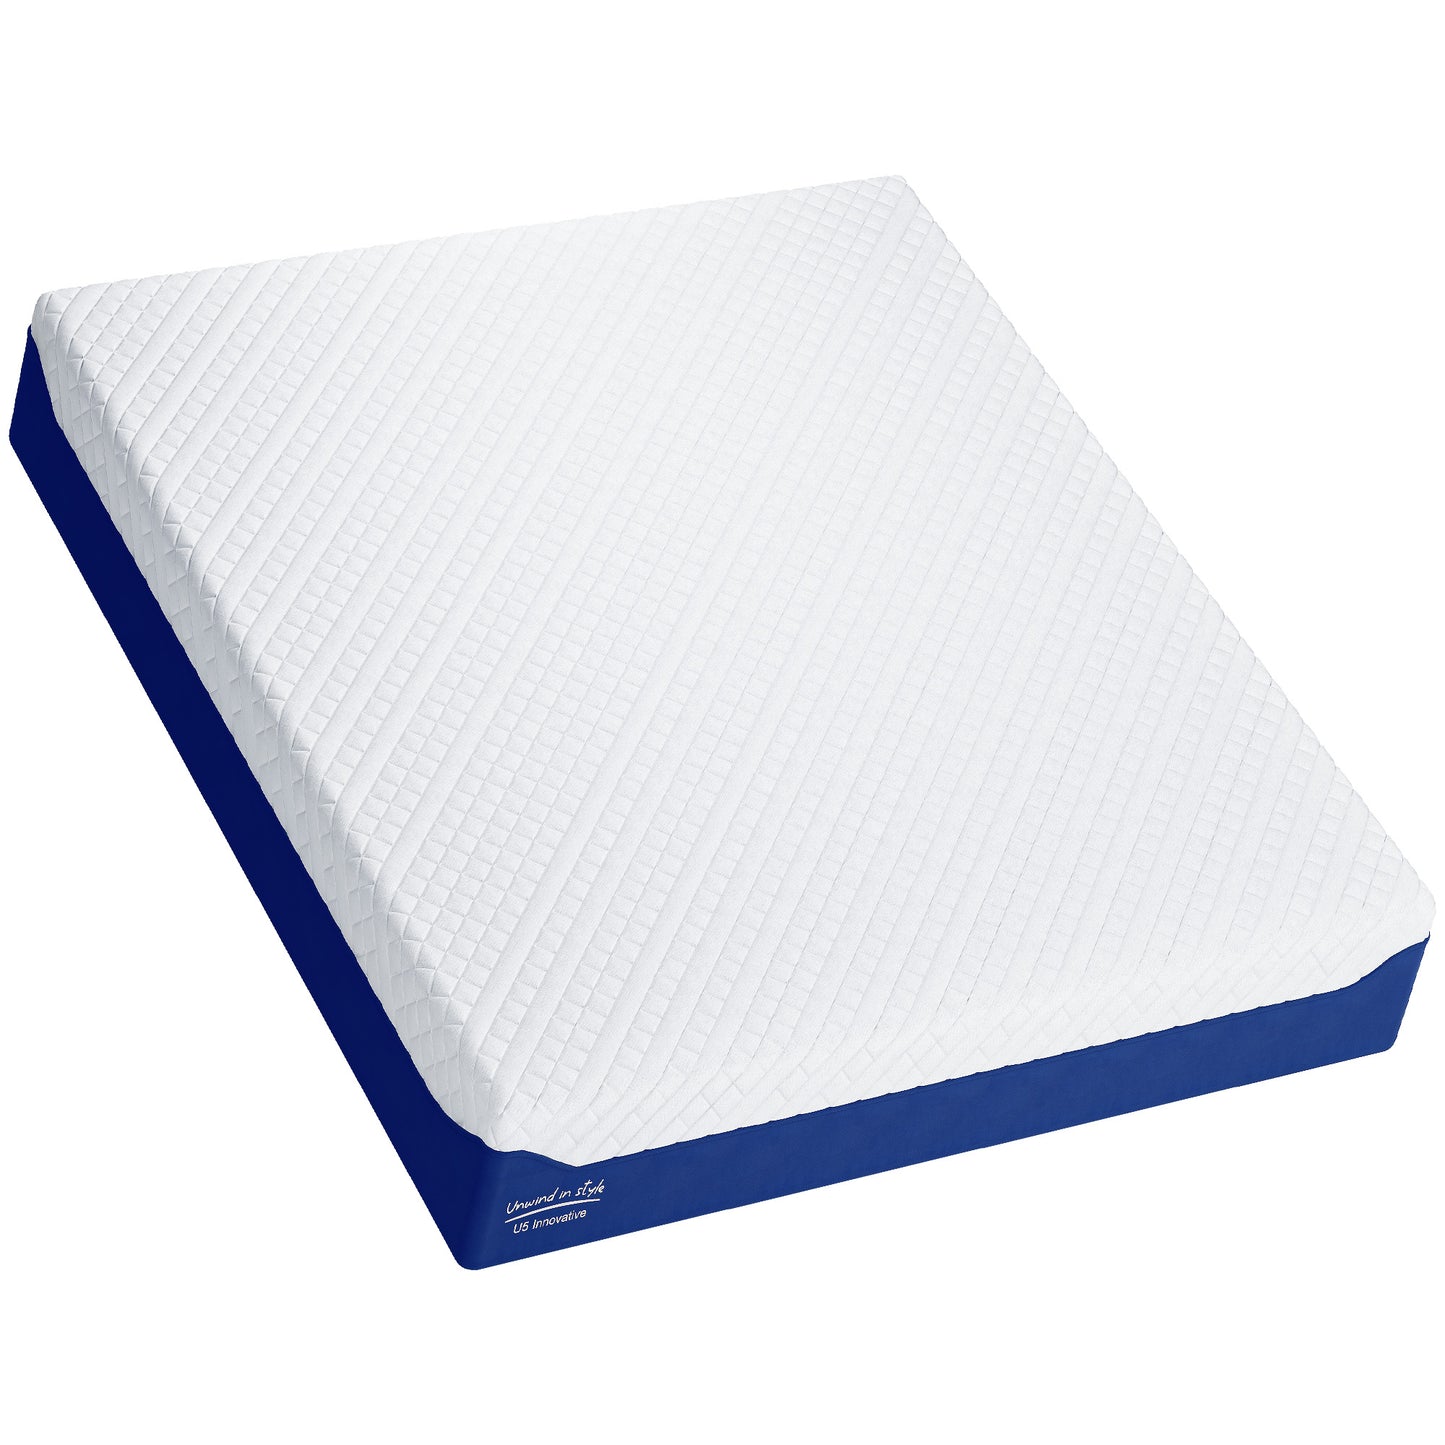 SogesPower 12inches Thickness Hybrid Mattress Gel Memory Foam- King, White+Blue